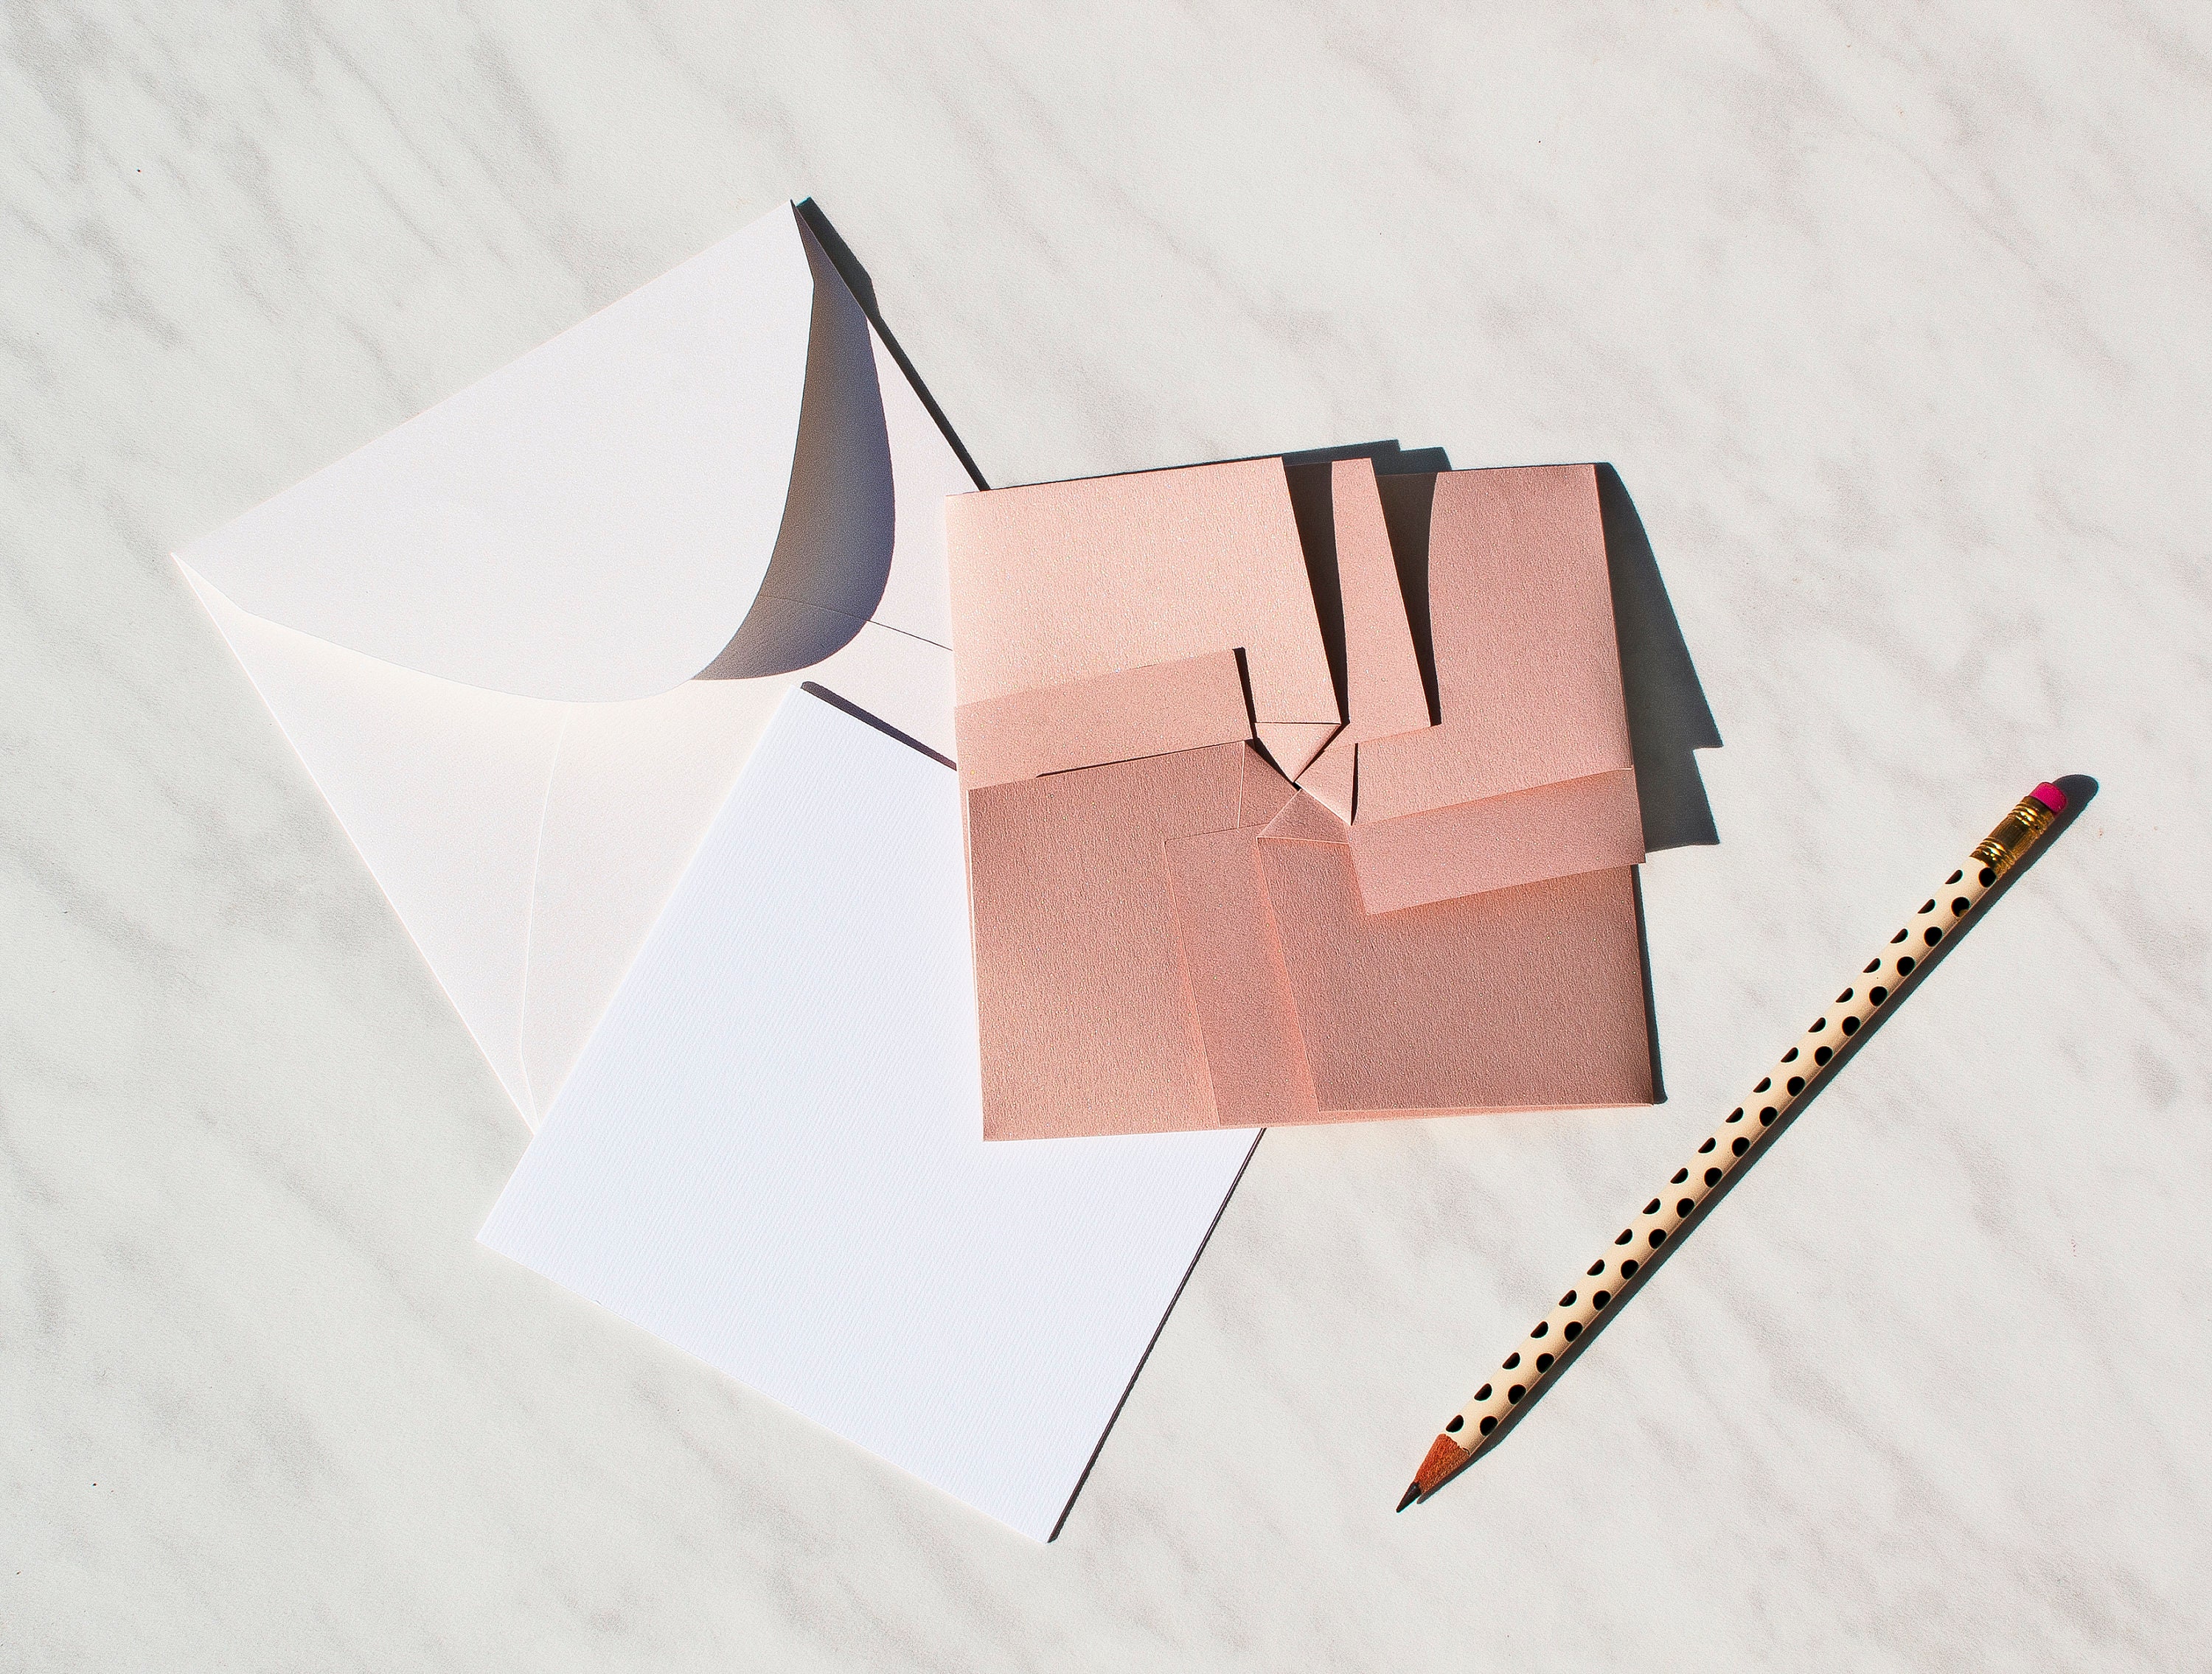 Enveloppe avec carte - Argent – Atelier origami